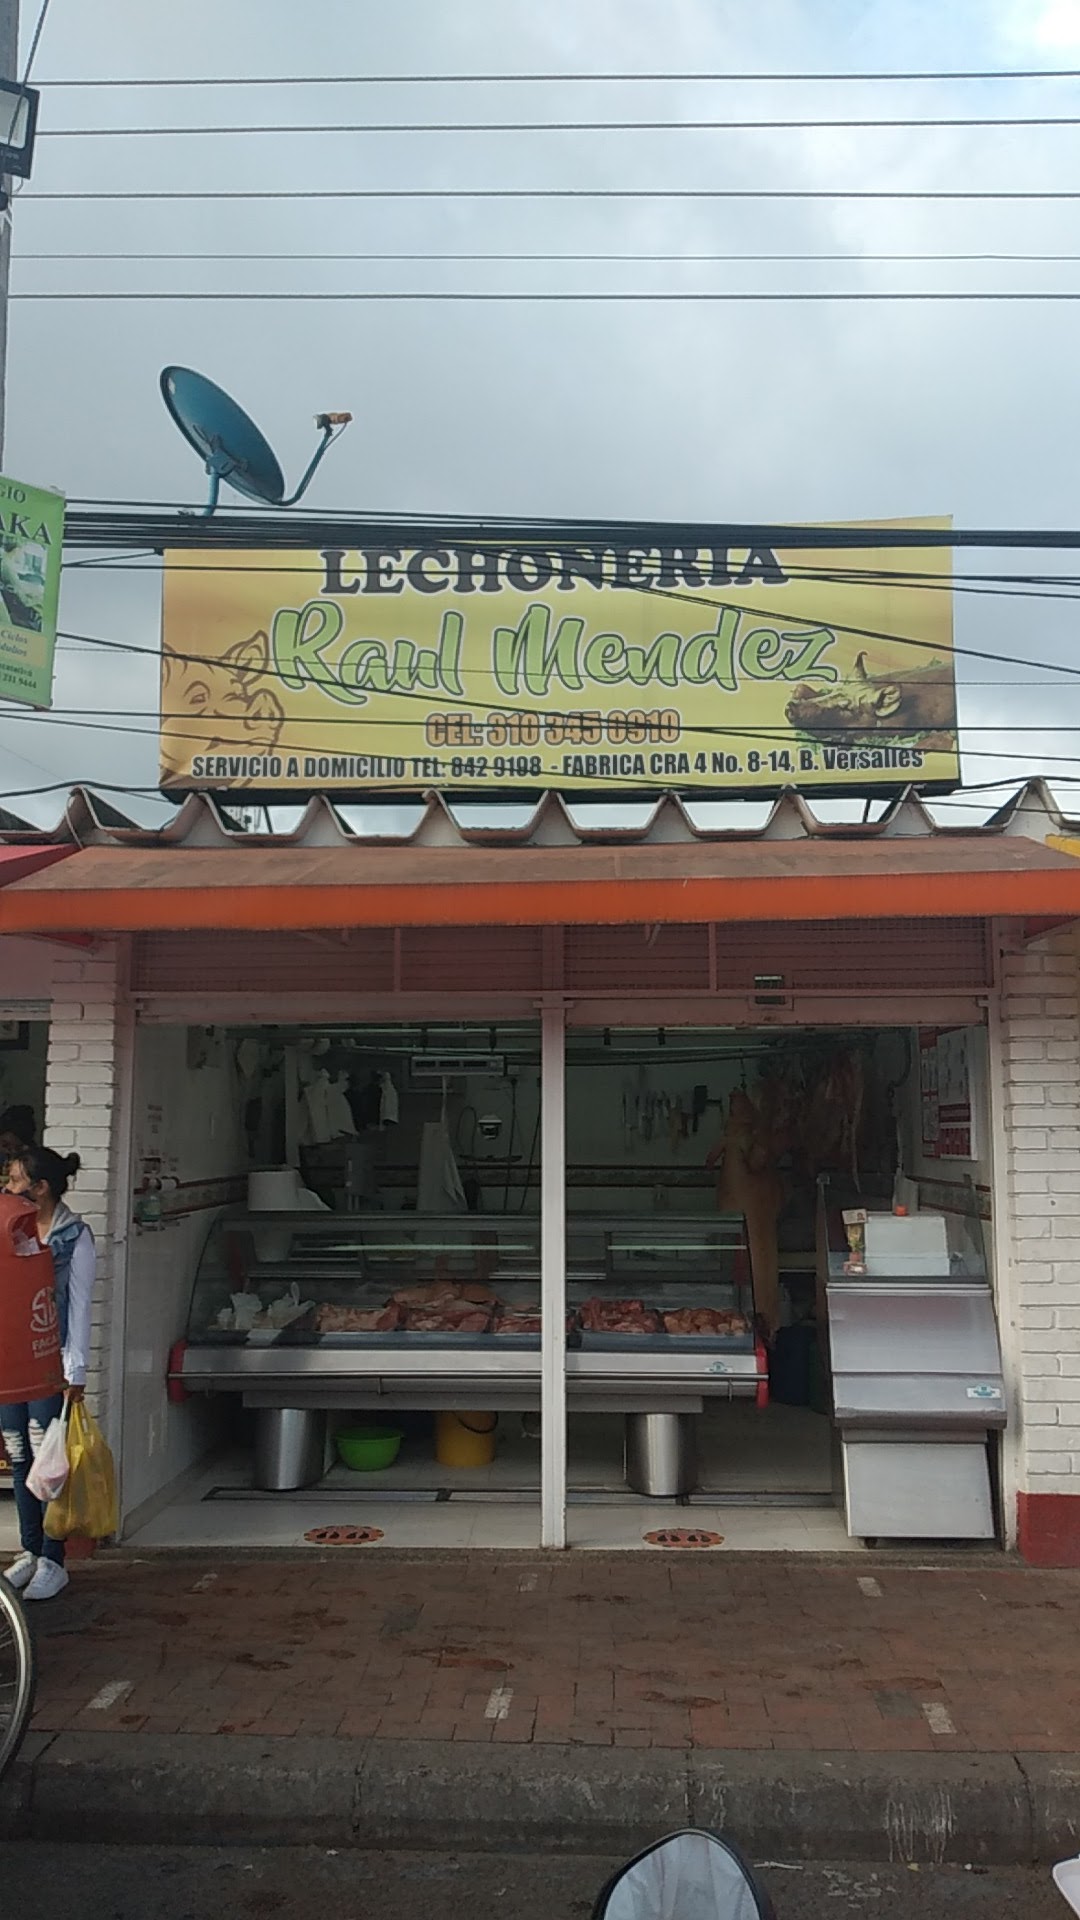 La Fortaleza de las carnes Raul Mendez